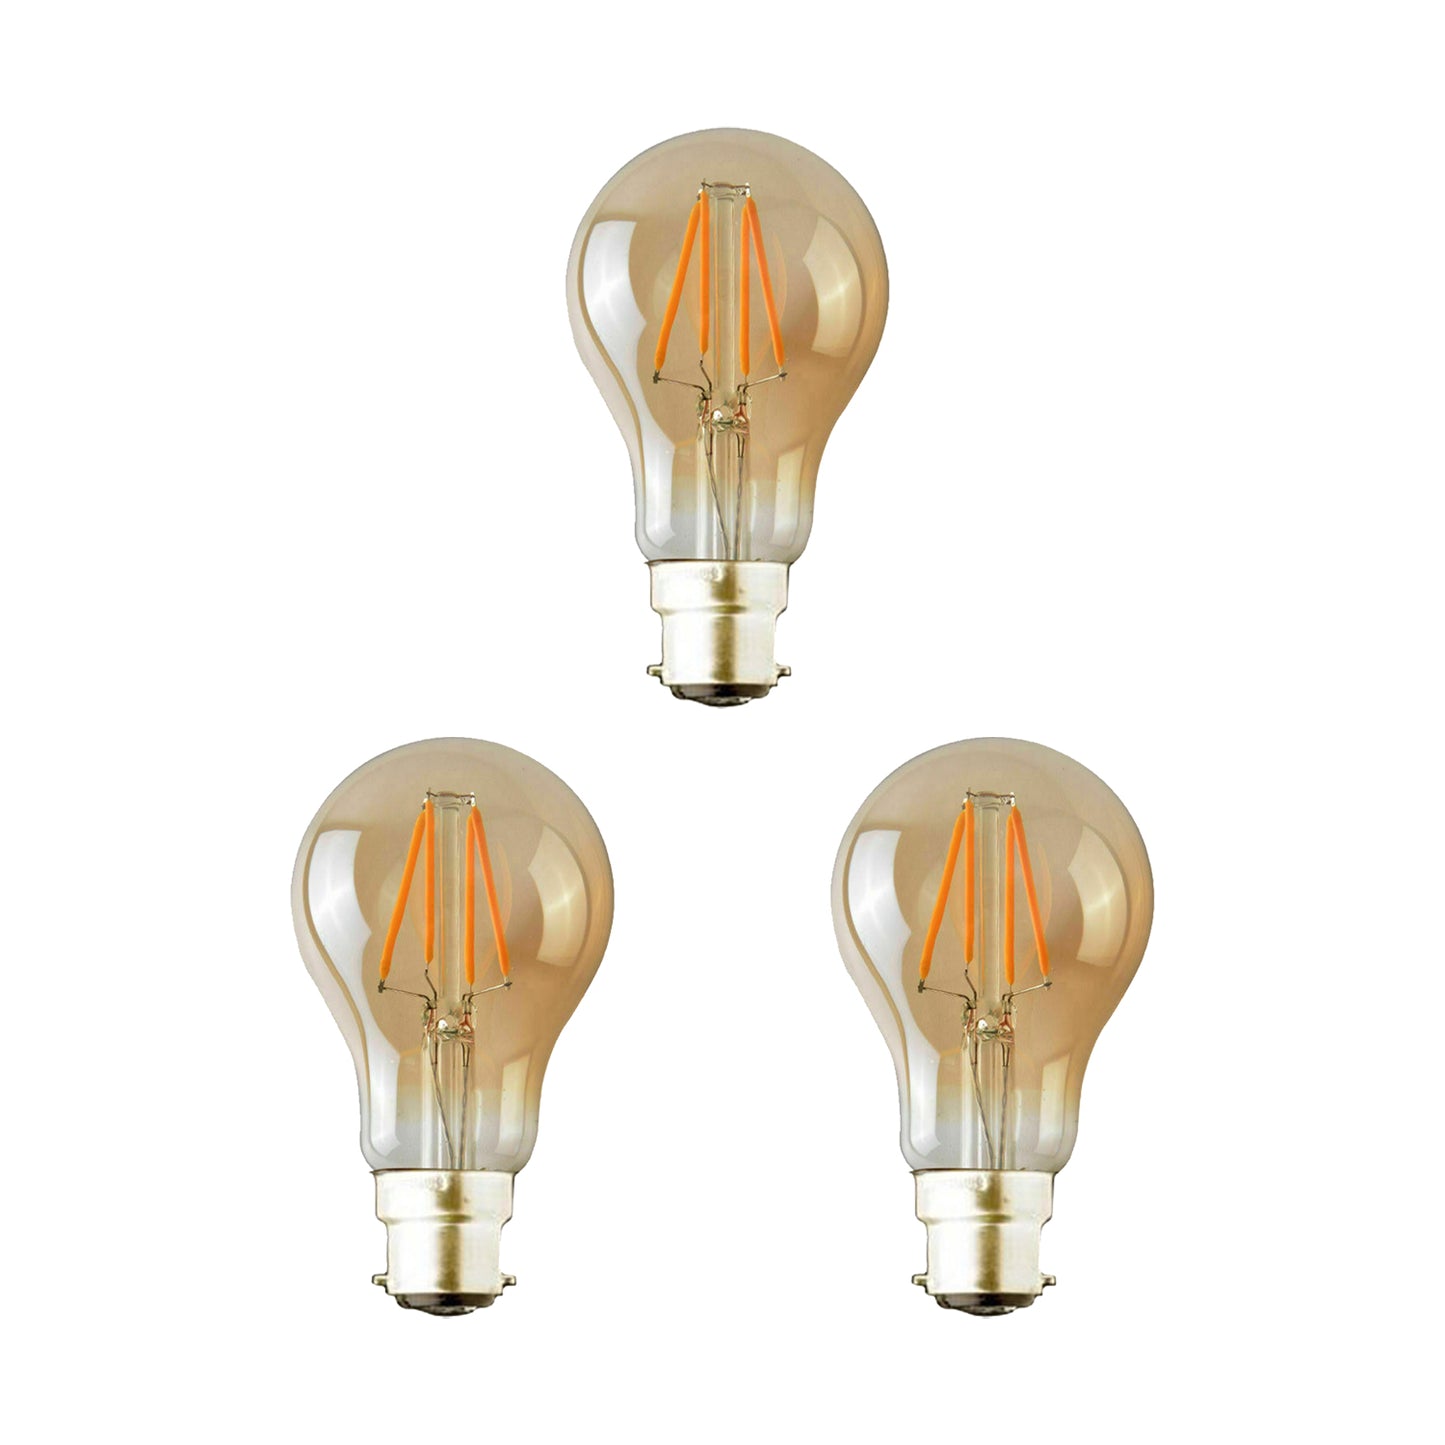 Vintage Industrial LED A60 B22 4w warmweiß bernsteinfarbene energiesparende Retro-Glühbirne~2768